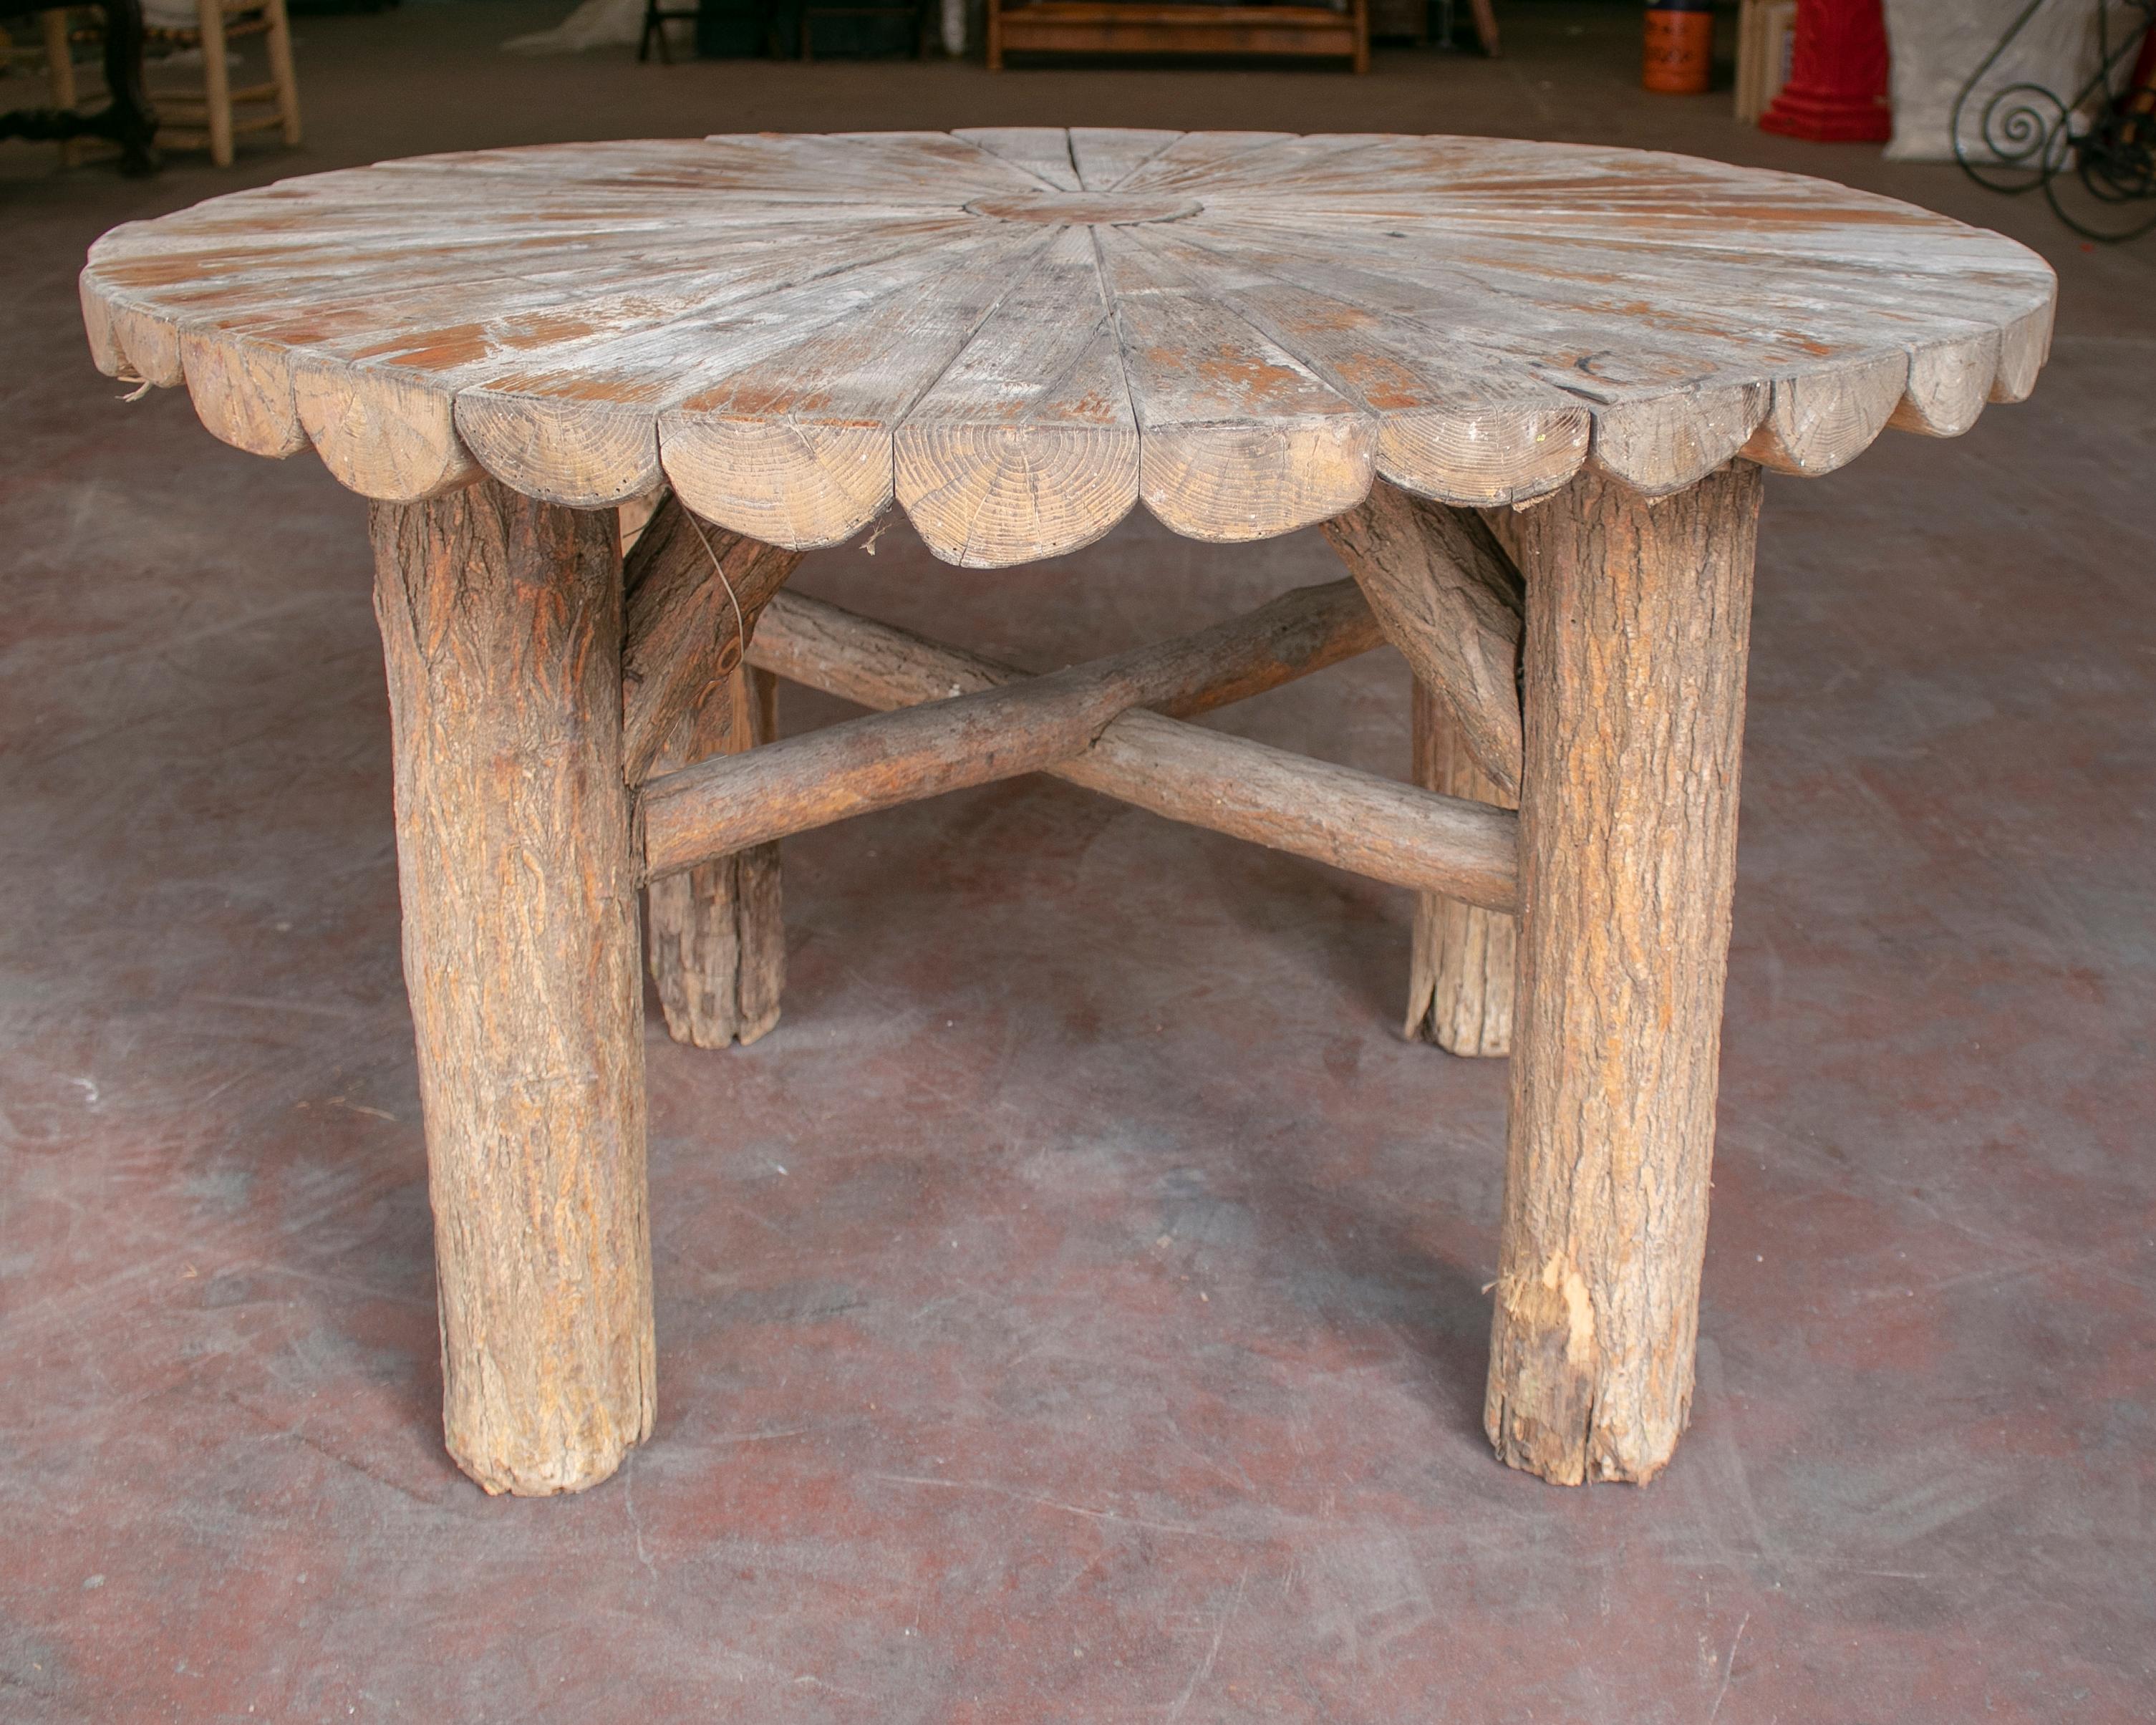 1980s Spanish wooden garden table.